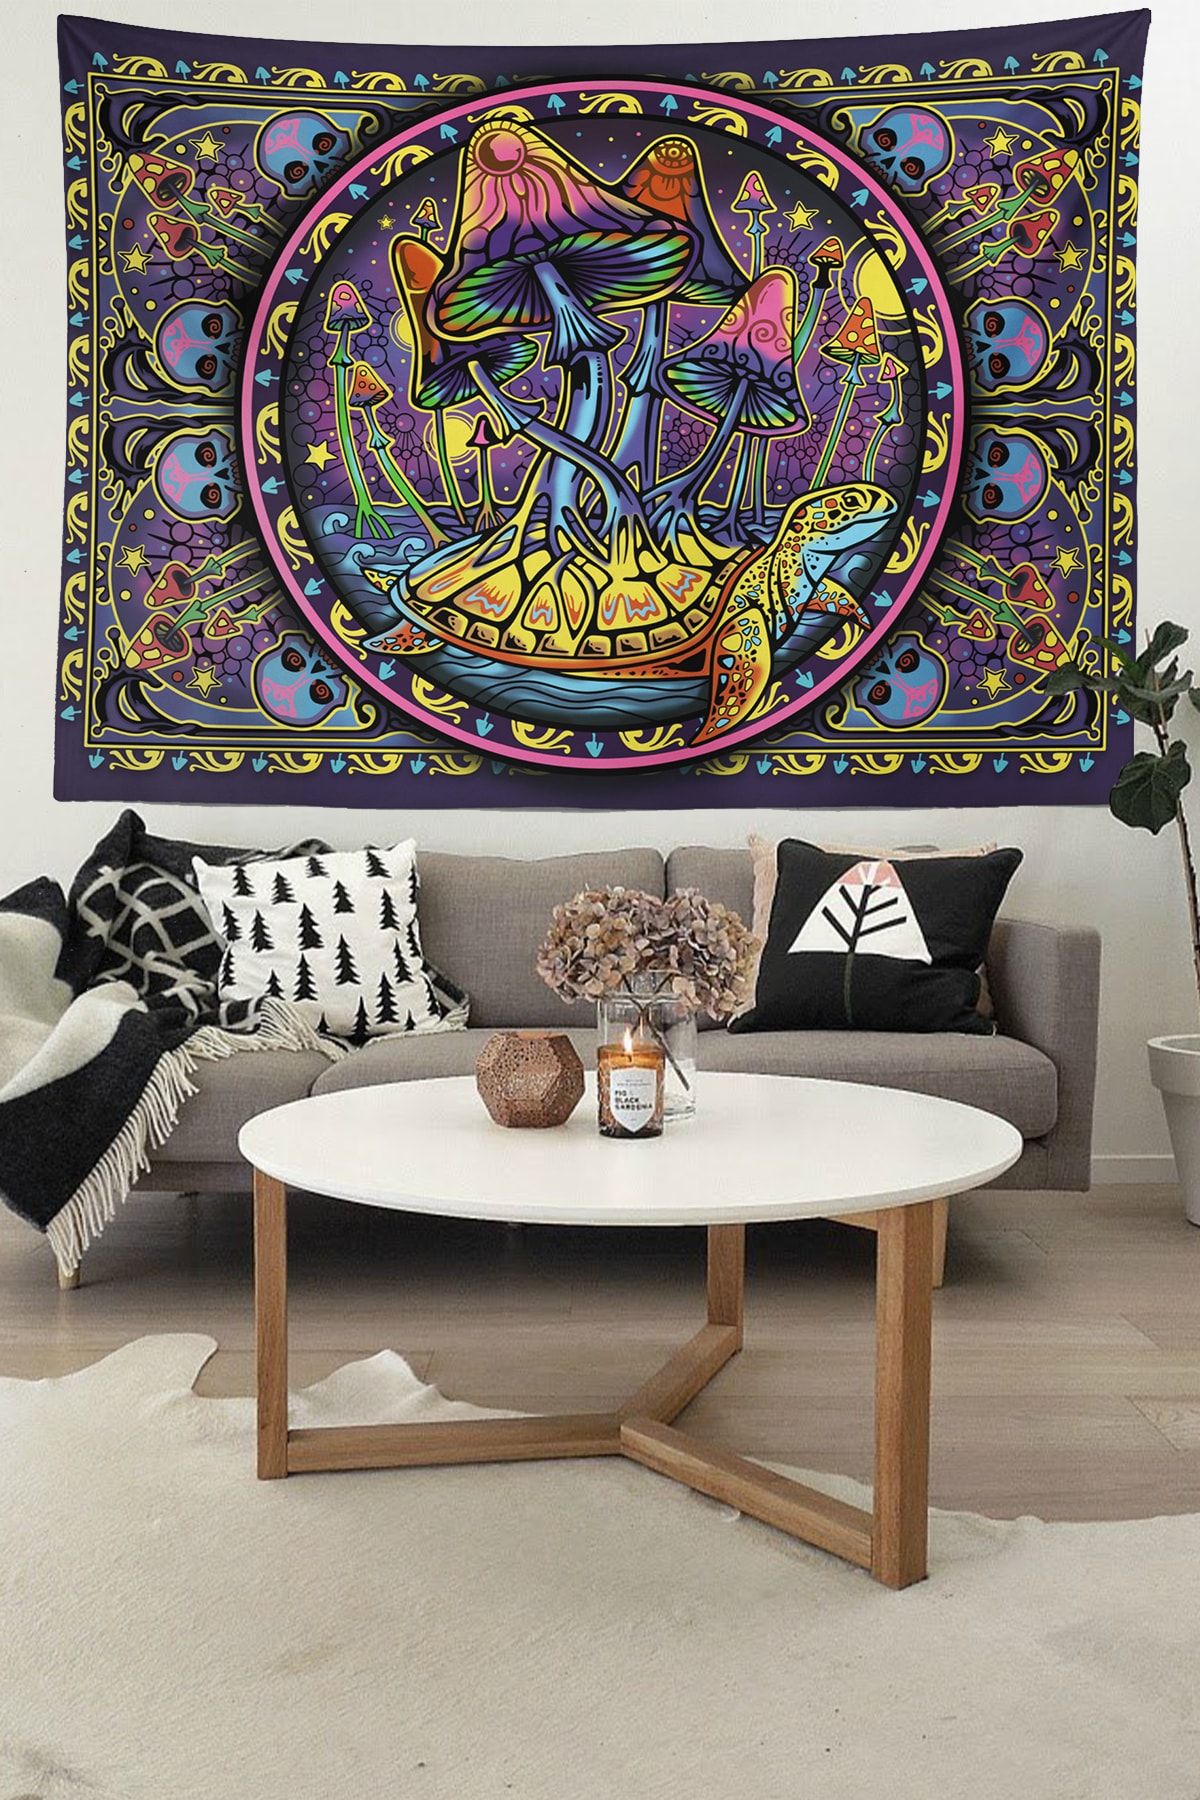 Kozmik Tapestry Psychedelic Mushroom And Skull Pamuklu Kumaş Duvar Örtüsü